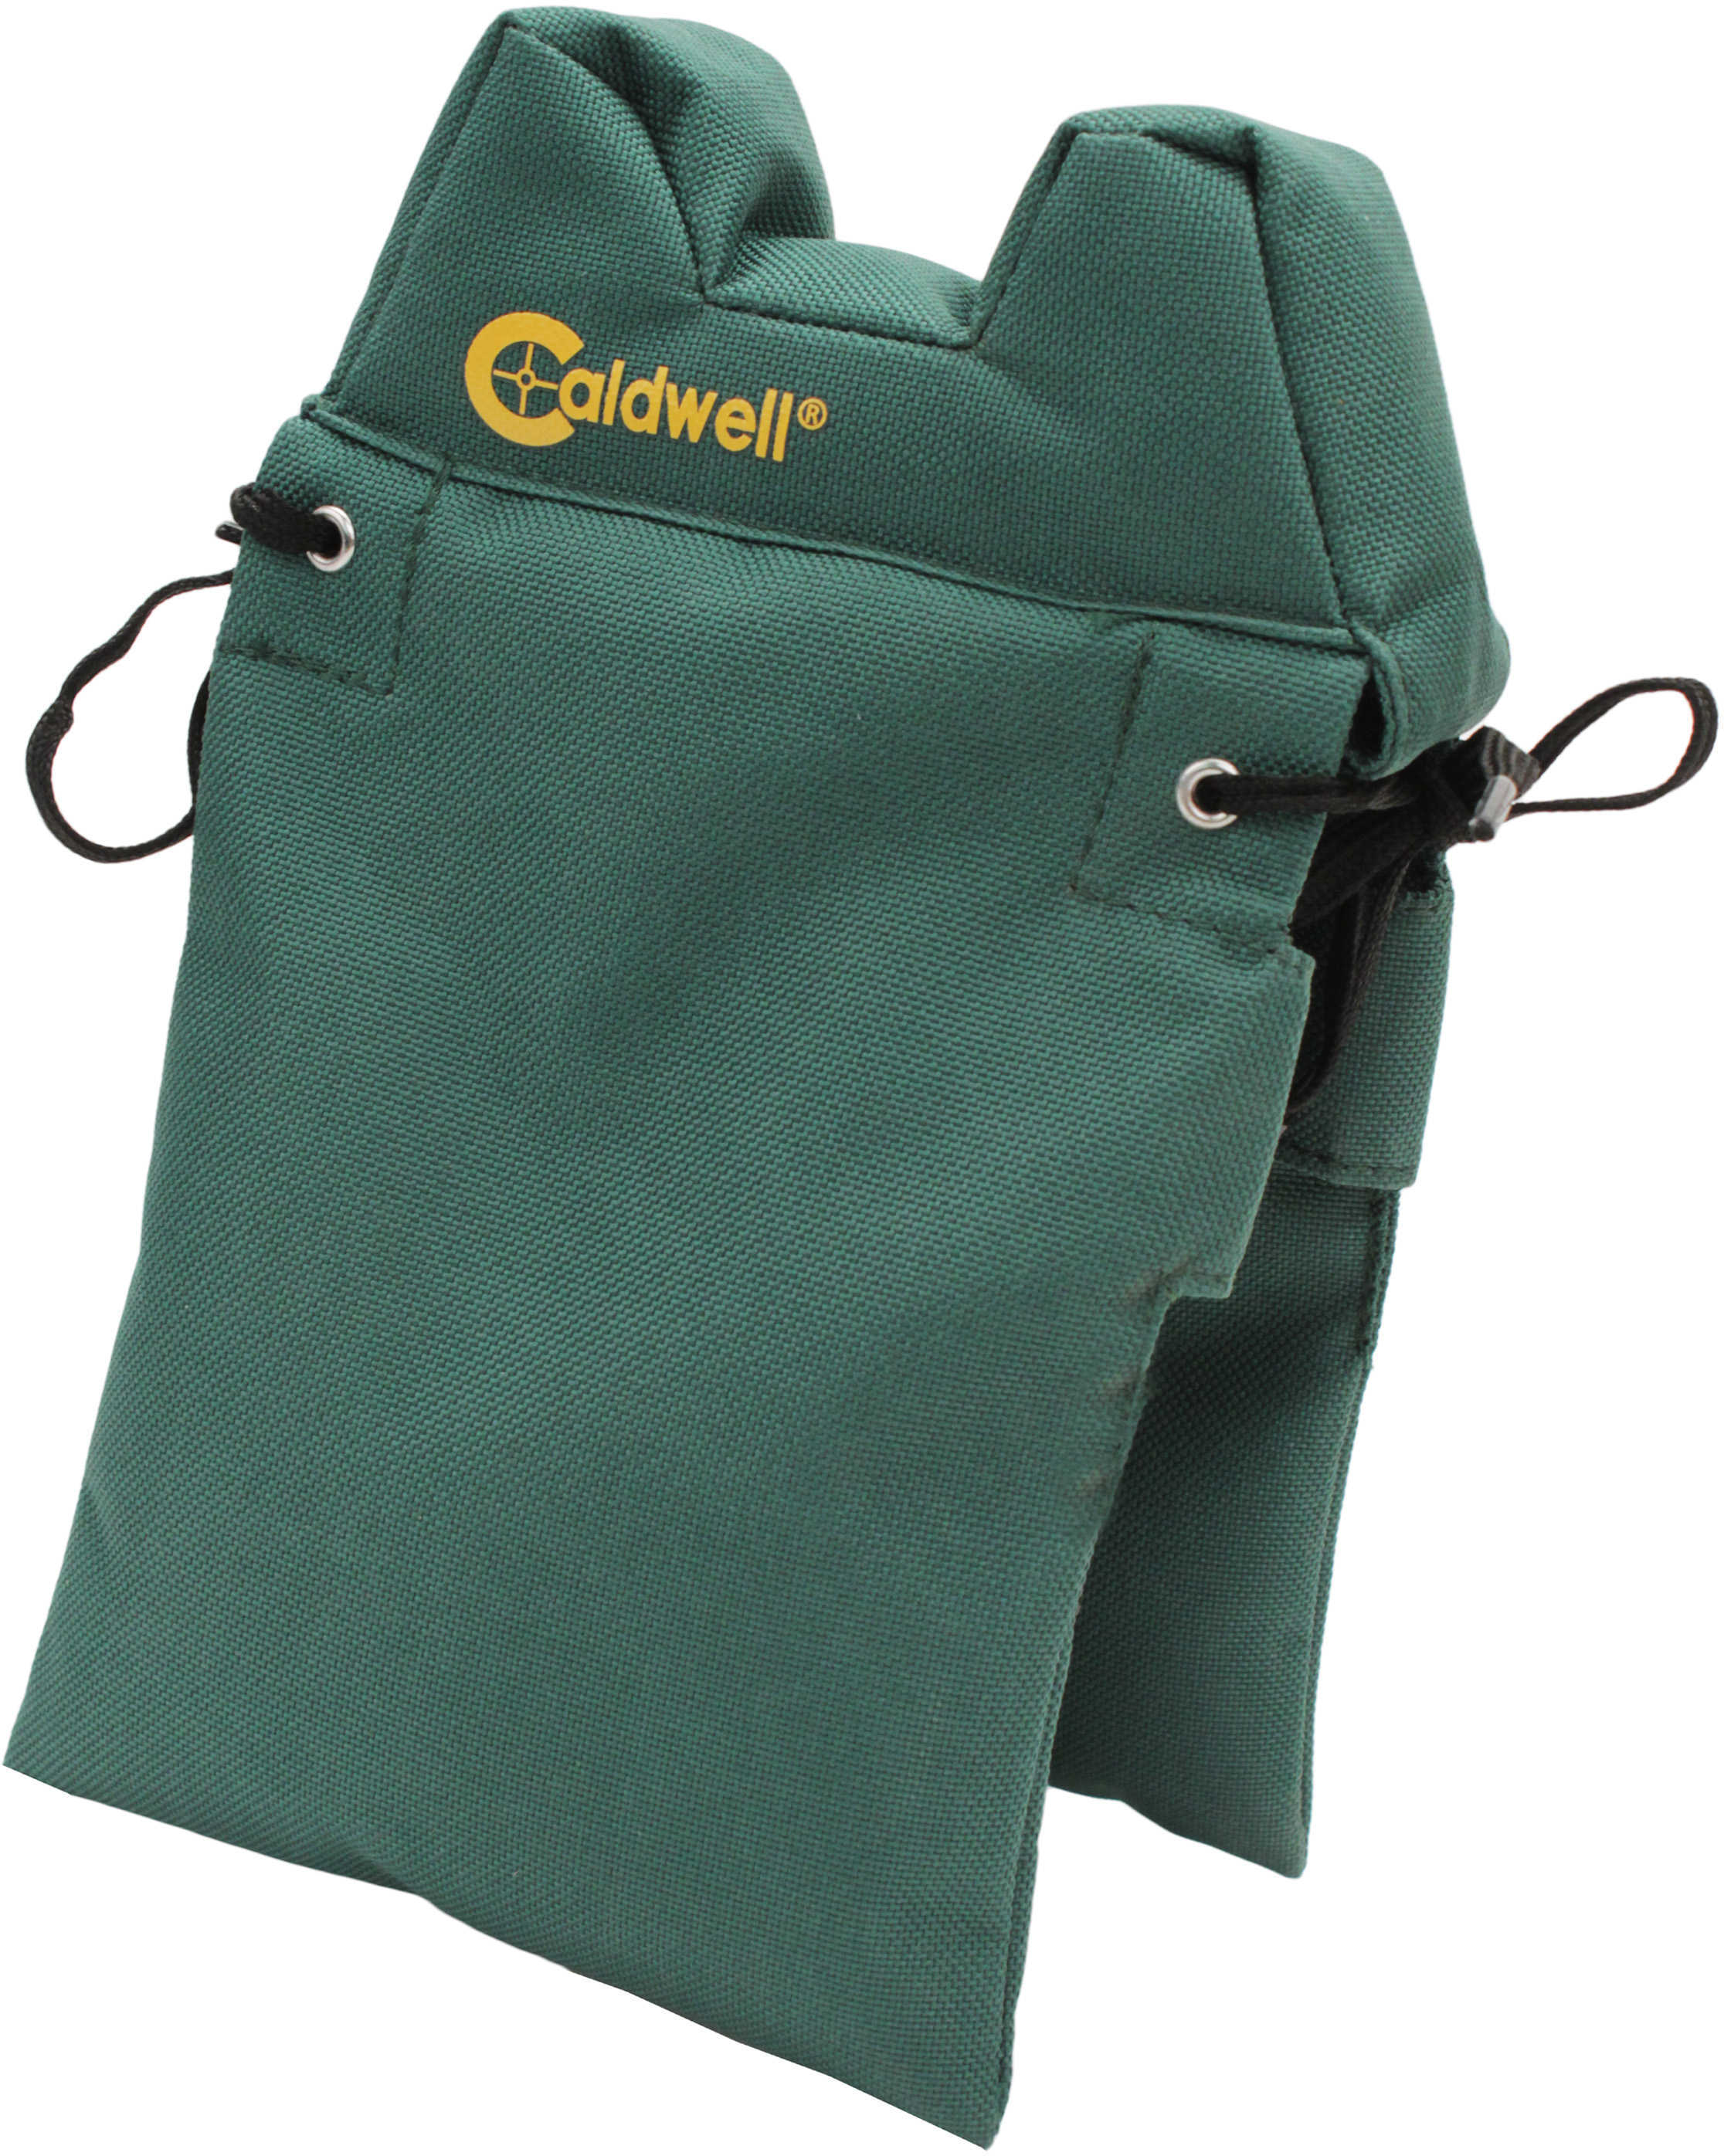 Caldwell Hunting Box/Ground Blind Bag Filled